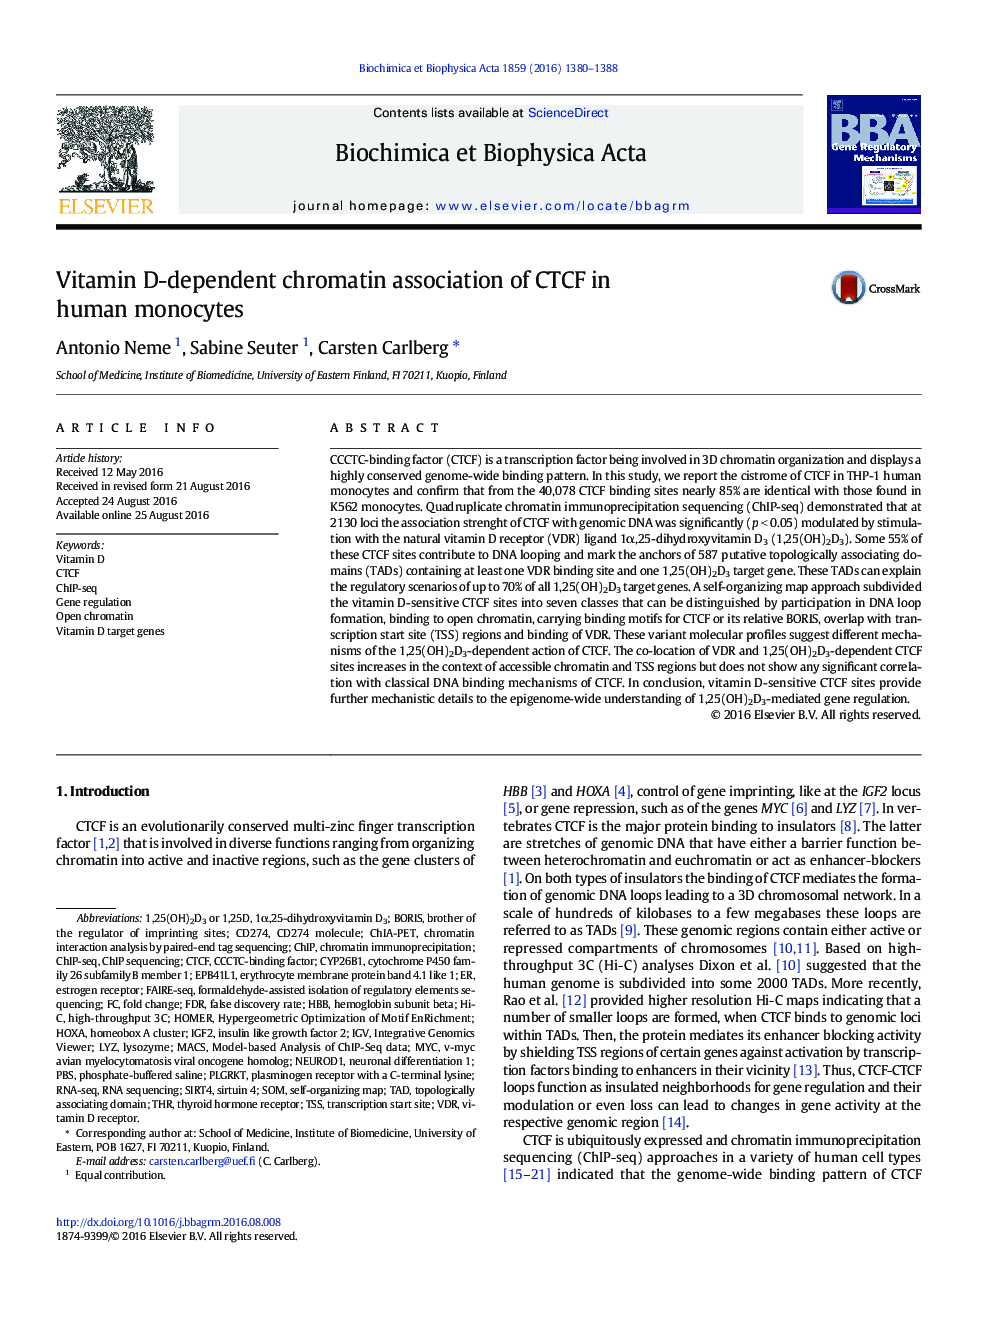 Vitamin D-dependent chromatin association of CTCF in human monocytes